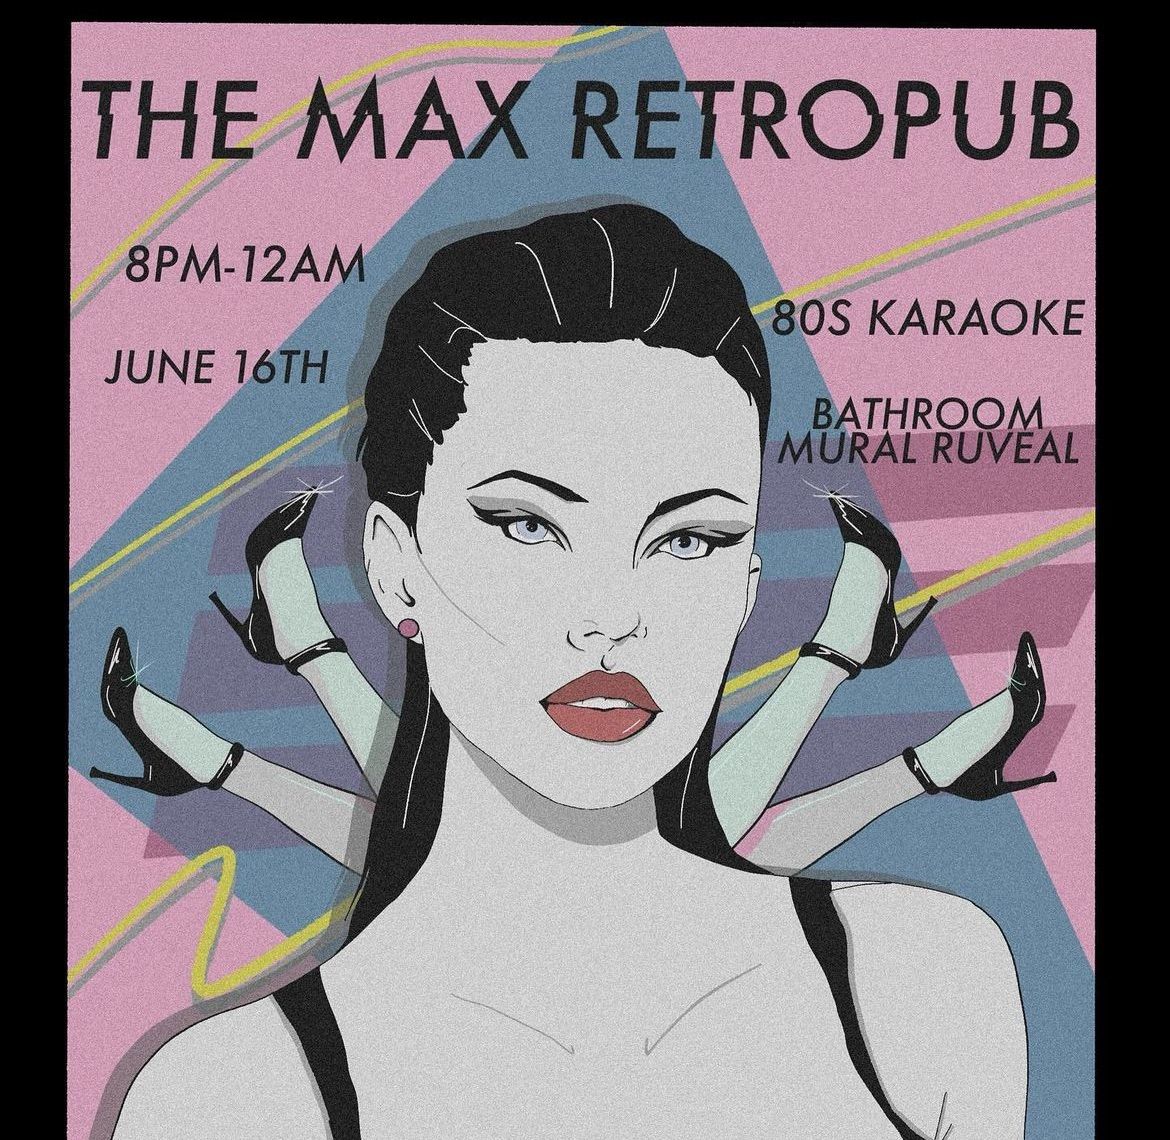 80\u2019s Karaoke with Dan Rocky Sunday at The Max